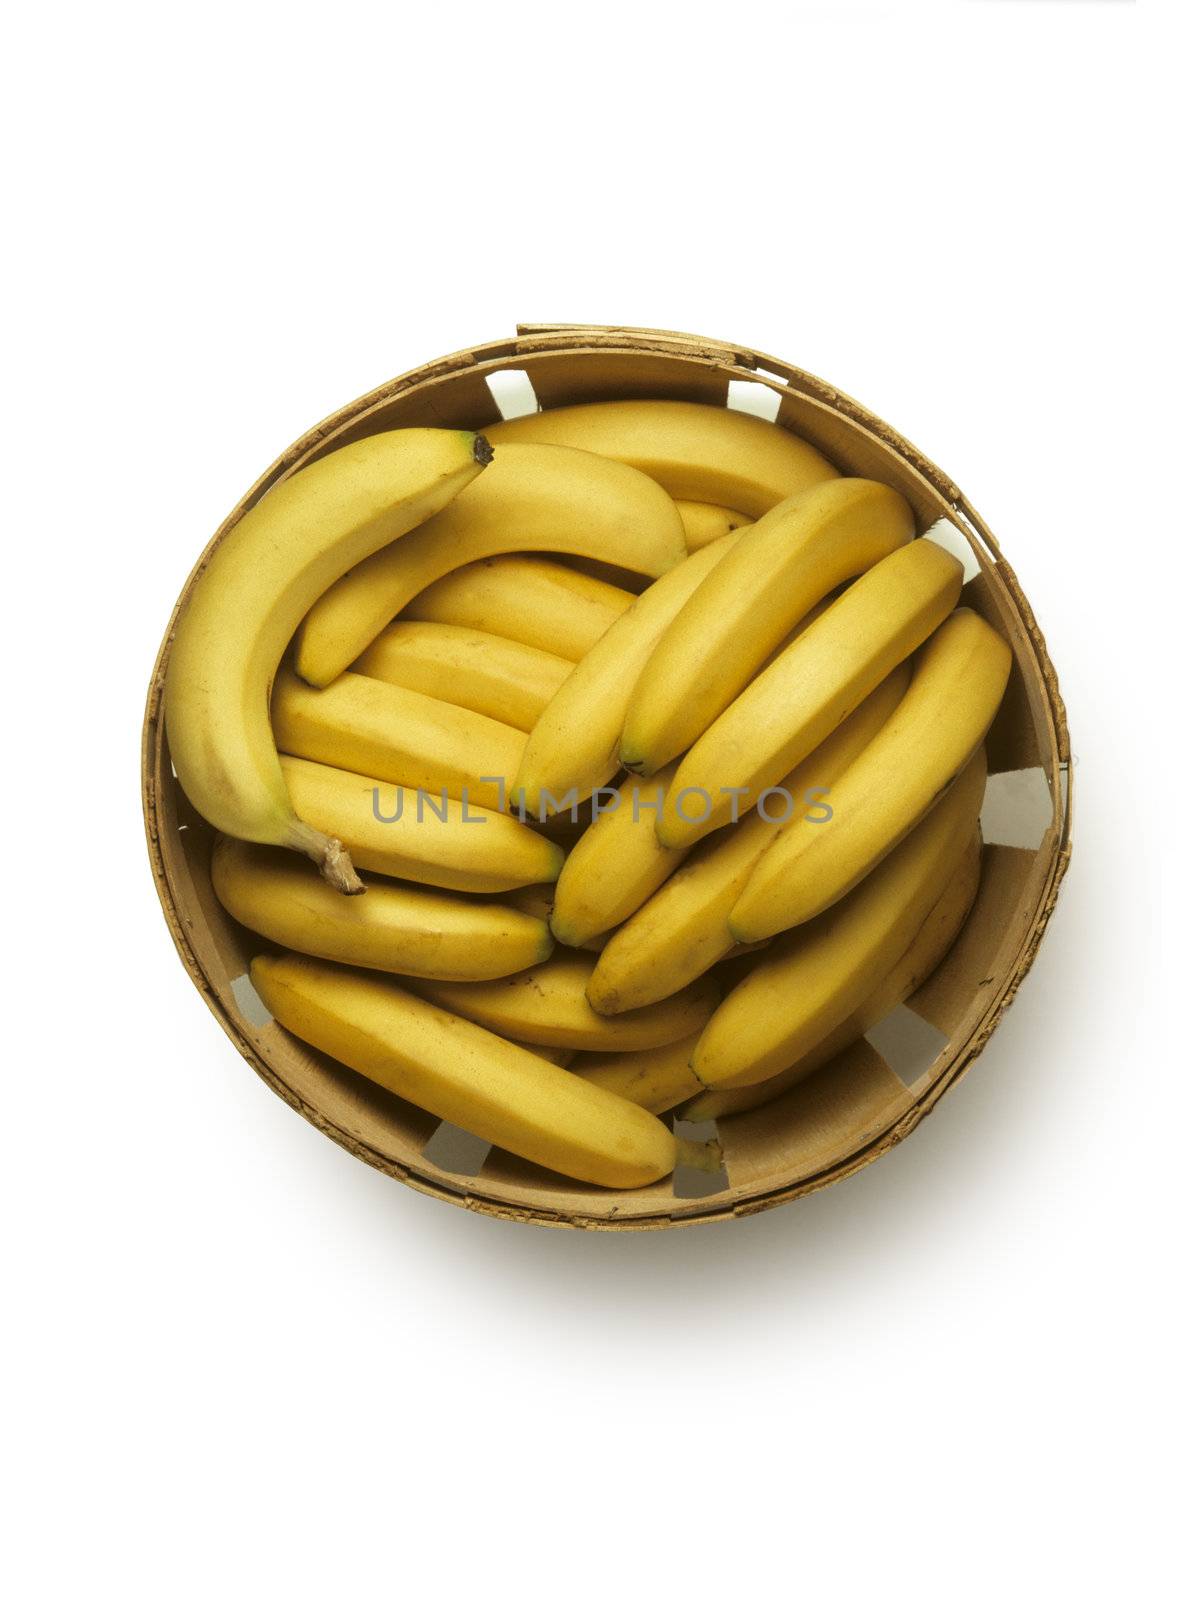 Bushel basket of bananas by Balefire9